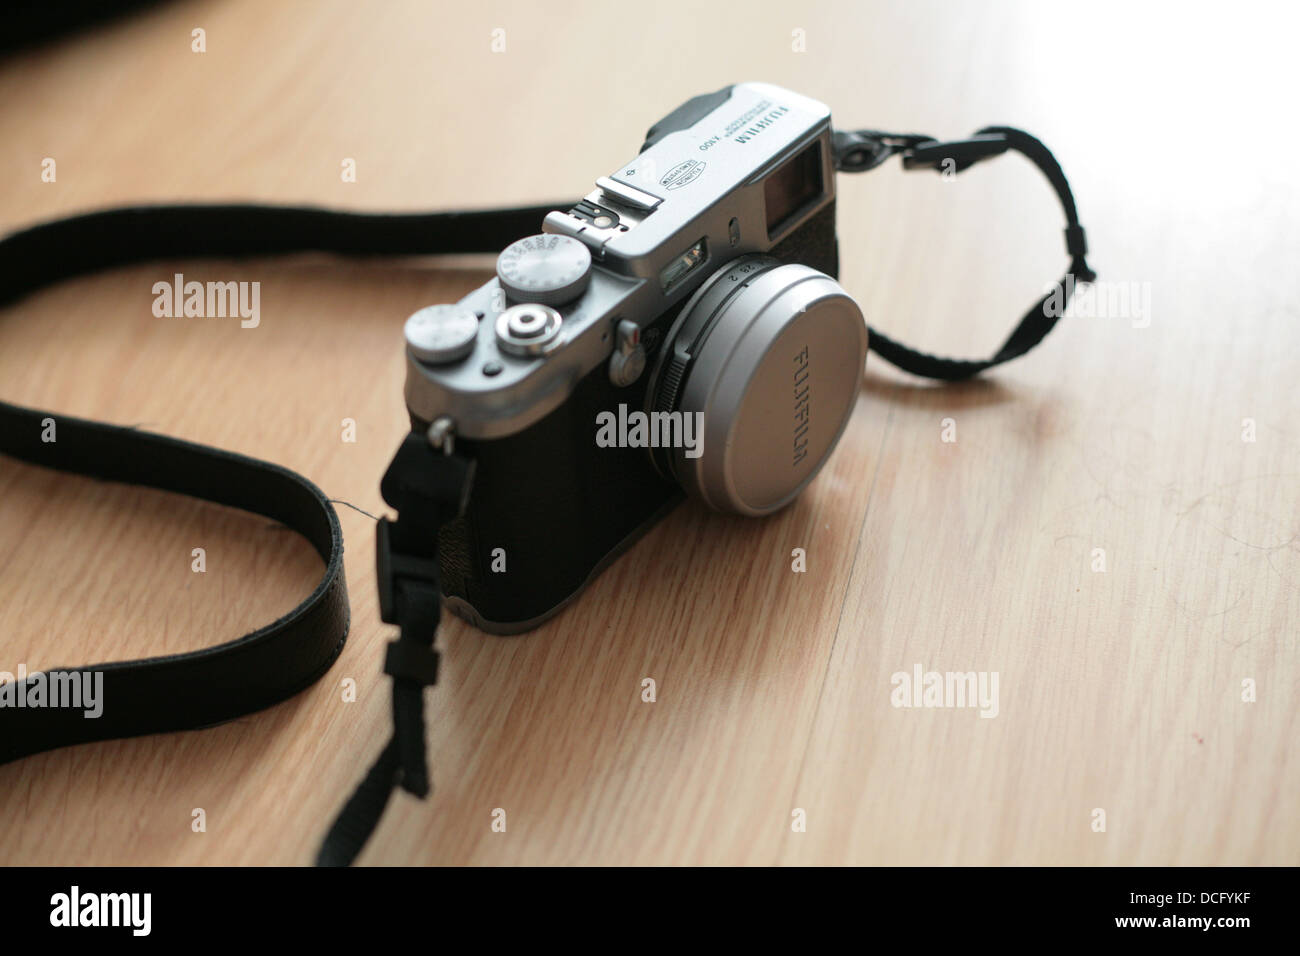 Un Fuji x100 fotocamera sul display Foto Stock